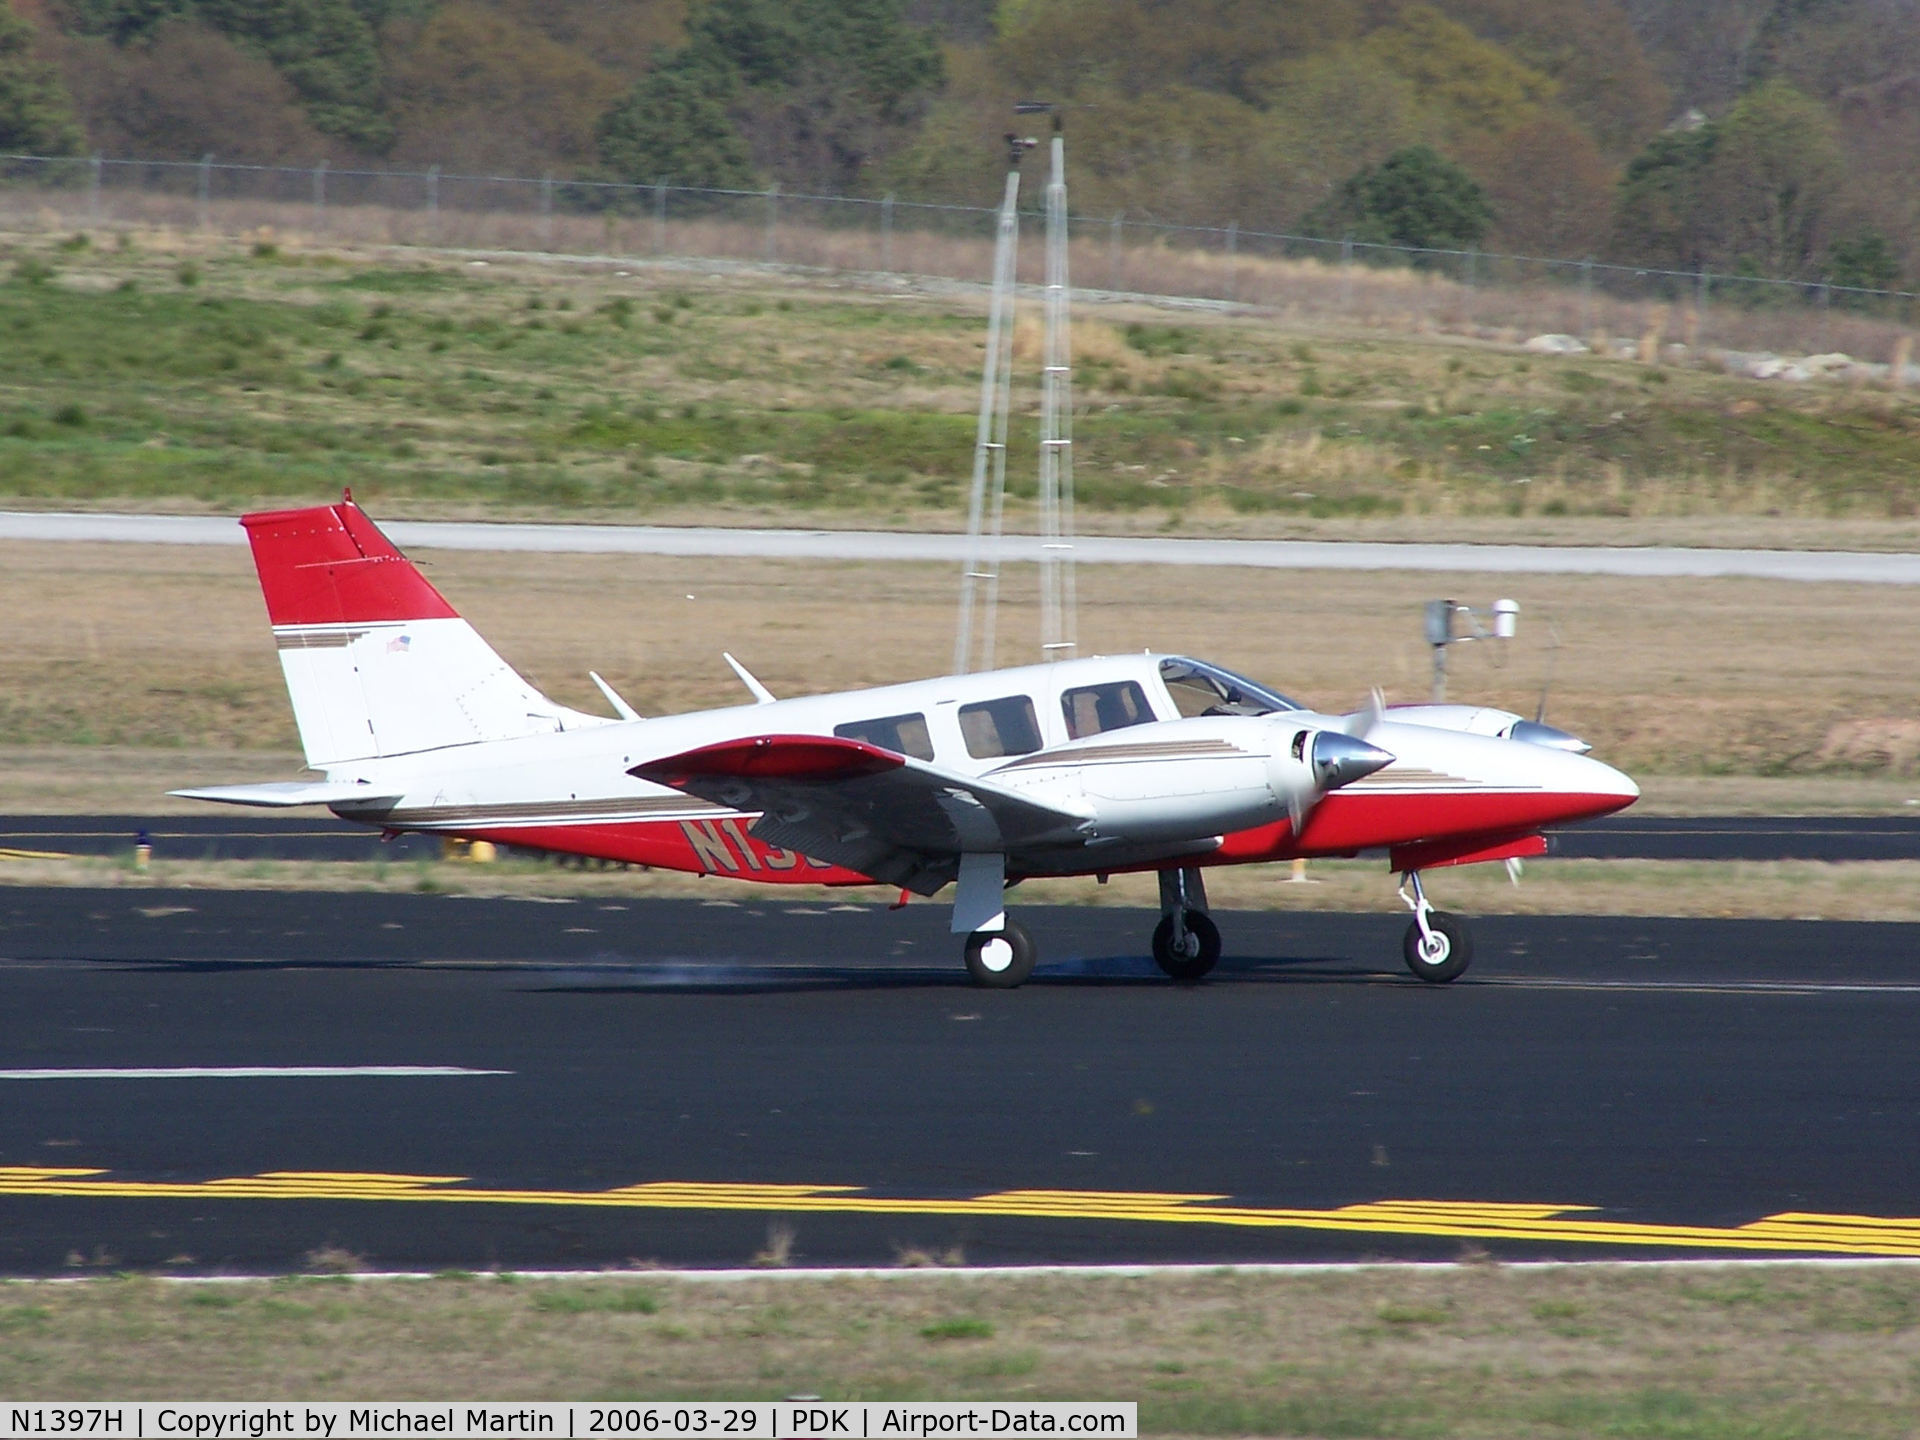 N1397H, Piper PA-34-200T C/N 34-7770124, Landing PDK on 20L